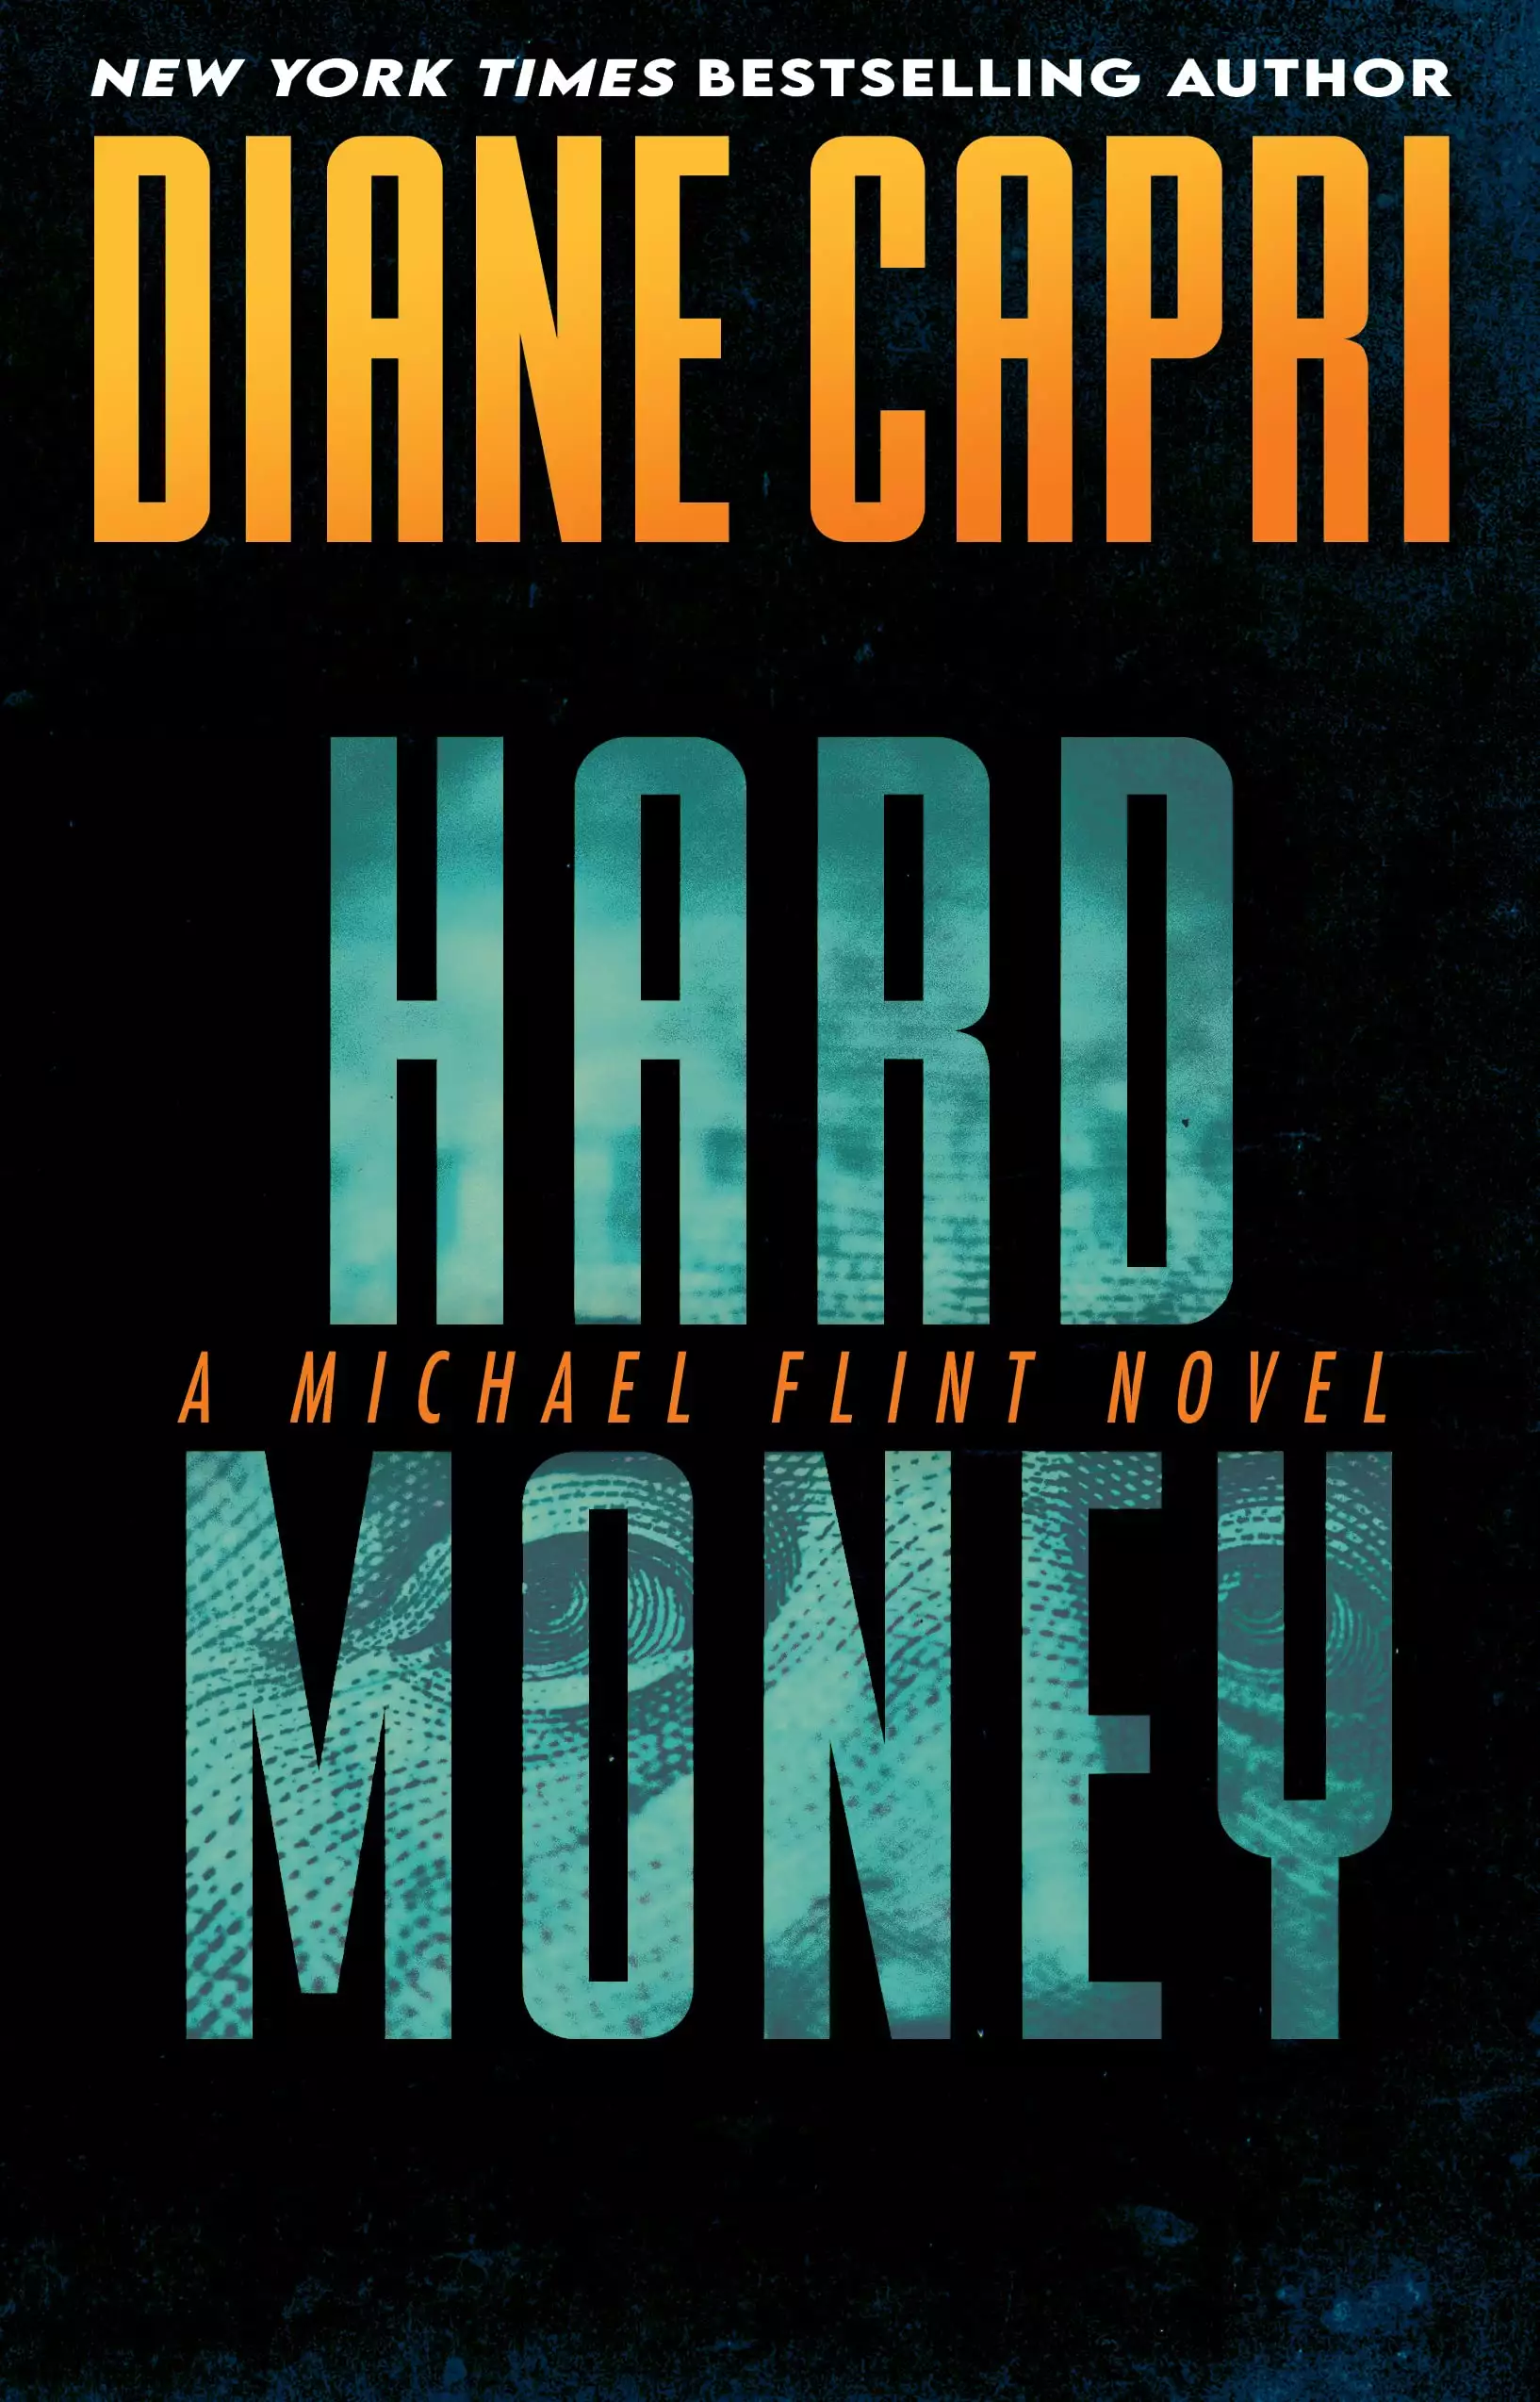 Hard Money: A Michael Flint Novel